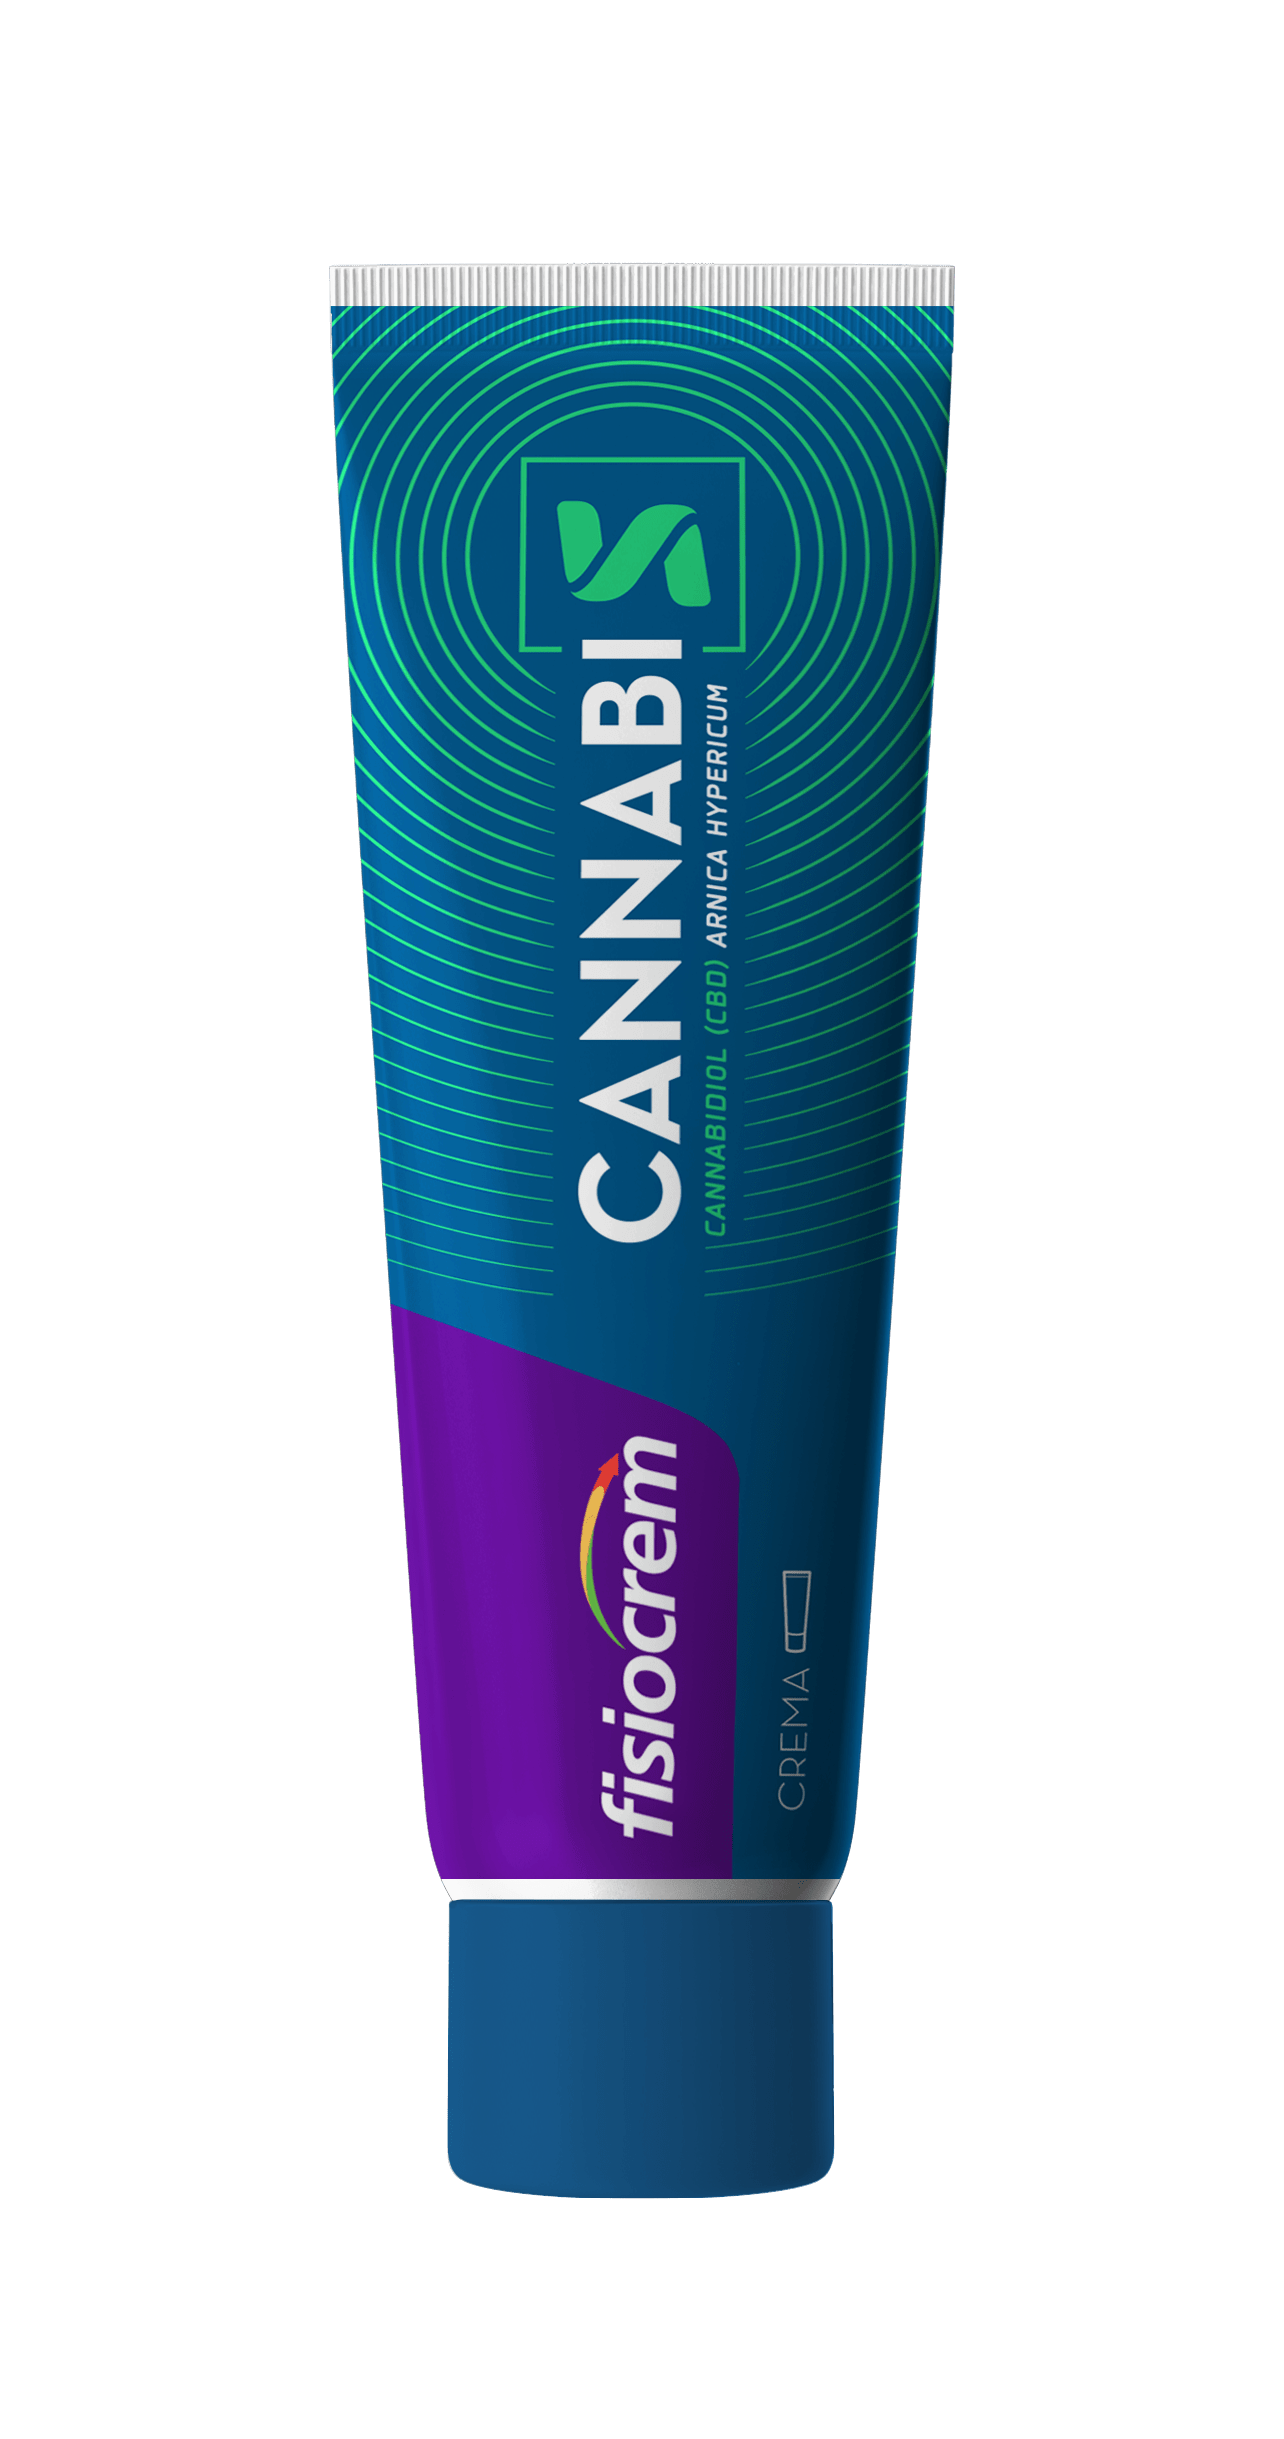 Fisiocrem Cannabis